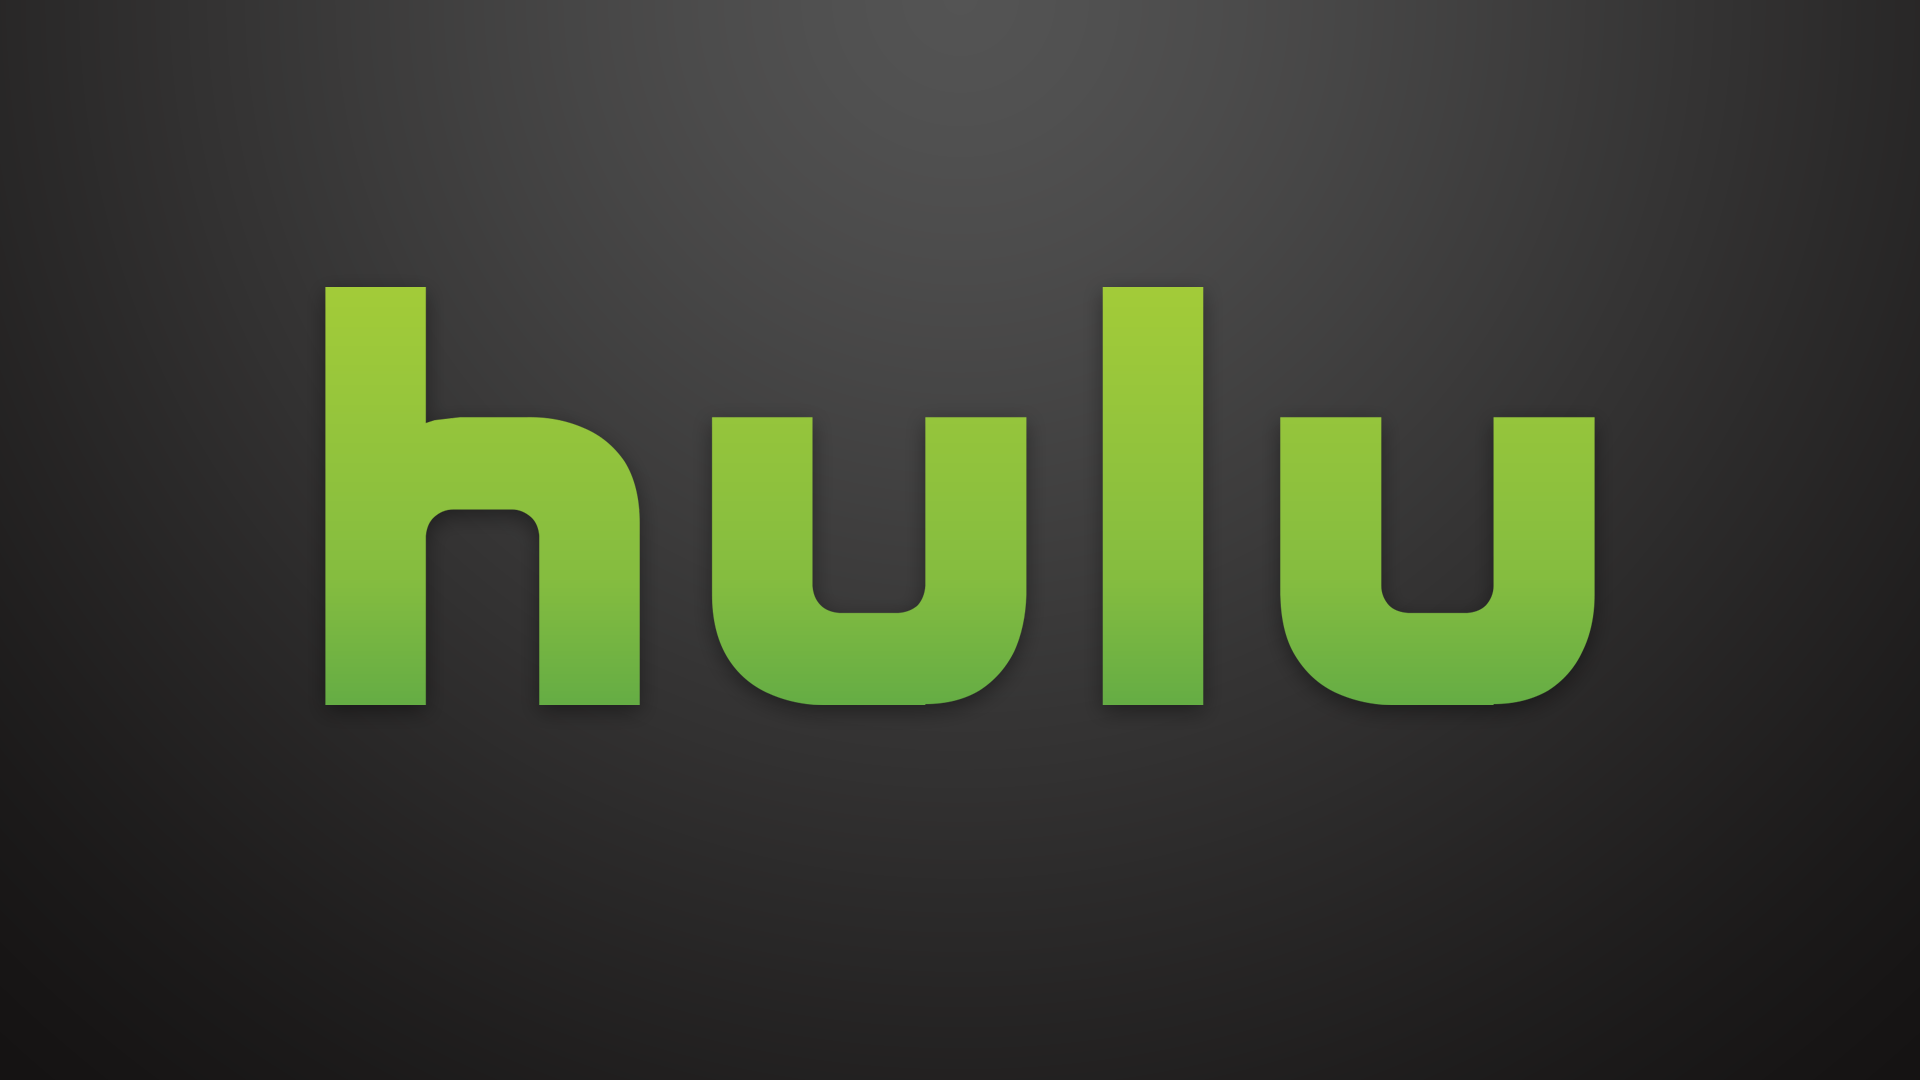 Hulu Brings NBC Networks to its Repertoire